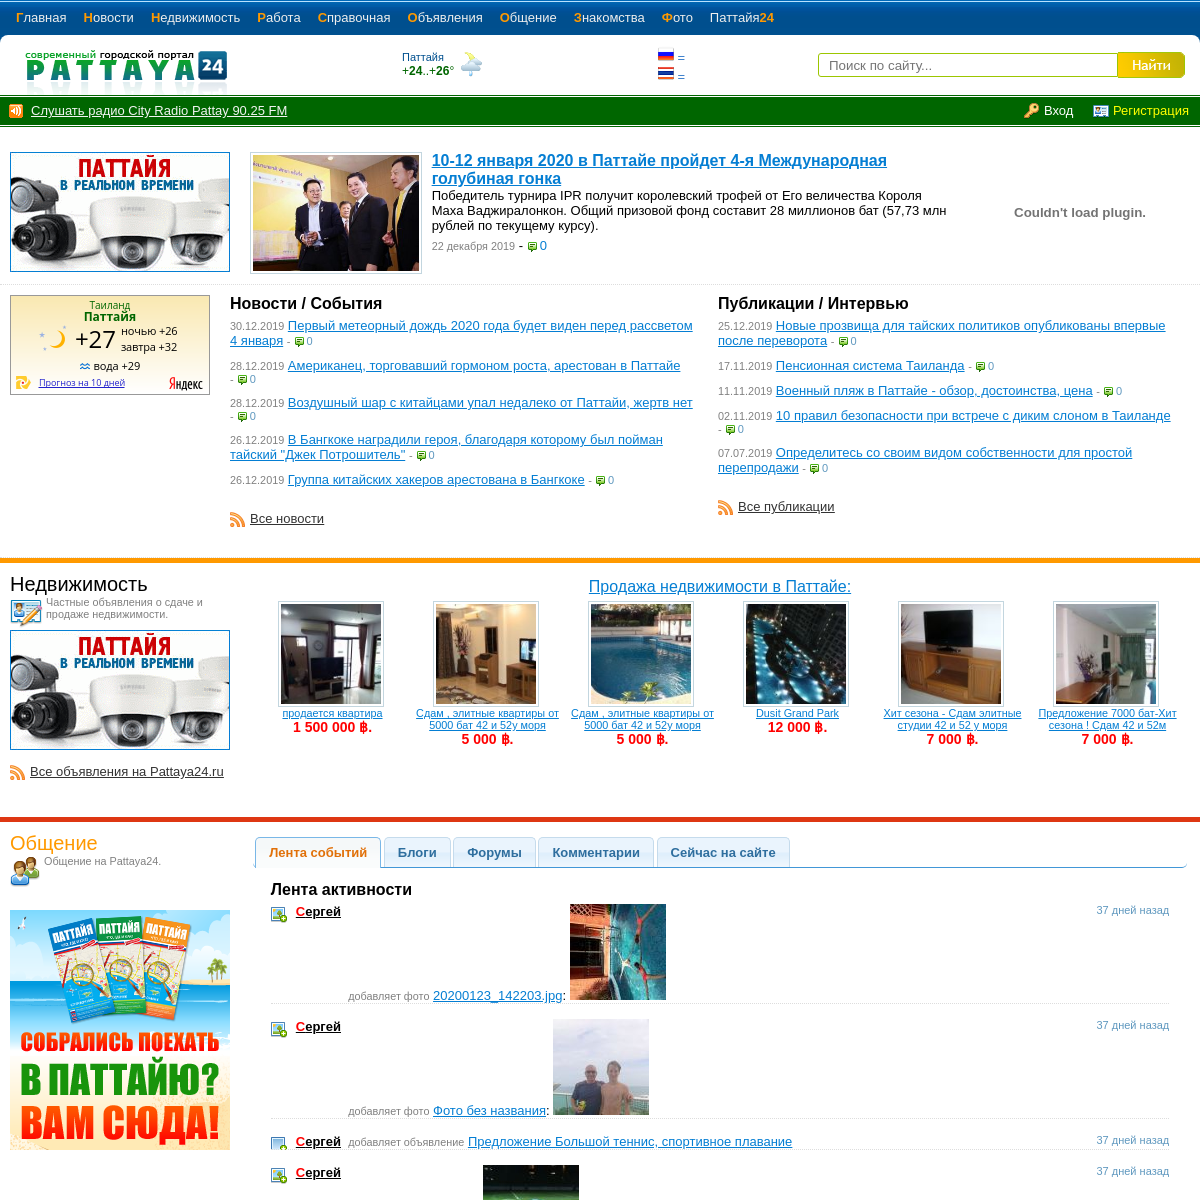 A complete backup of pattaya24.ru